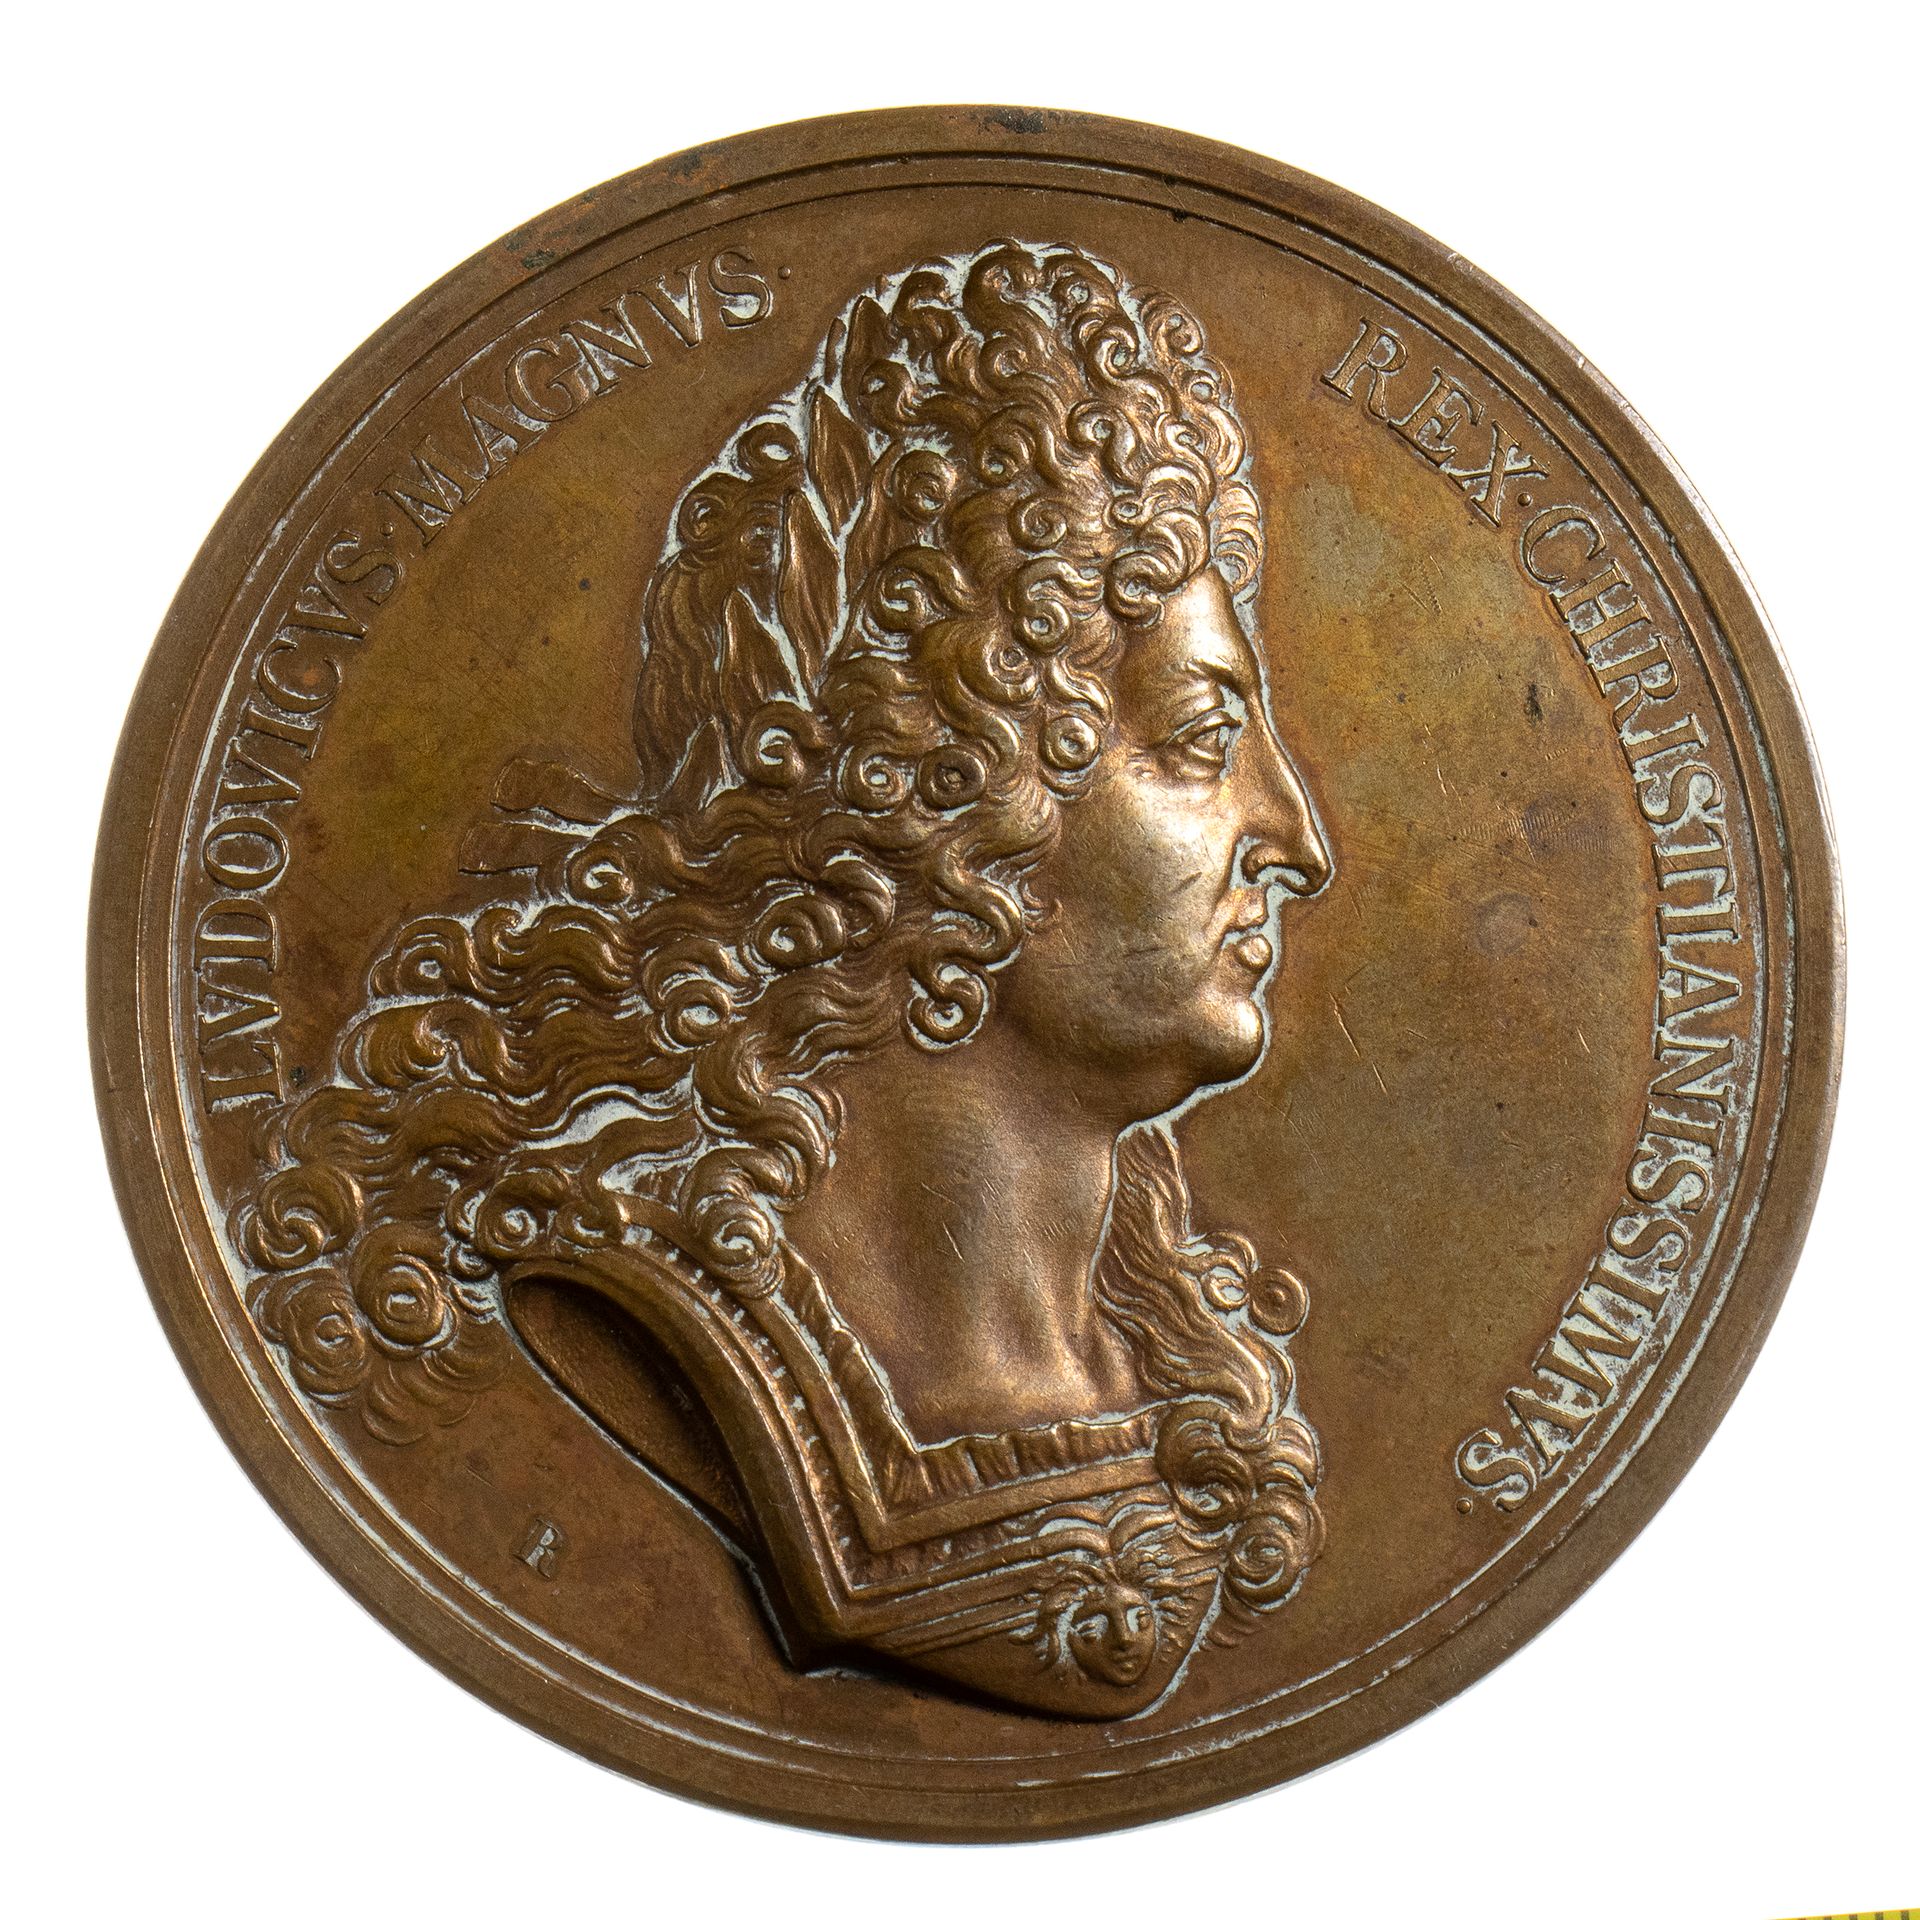 Null MEDAILLE
Louis XIV (1643-1715), Medaille von H. Roussel, "Expedition nach B&hellip;